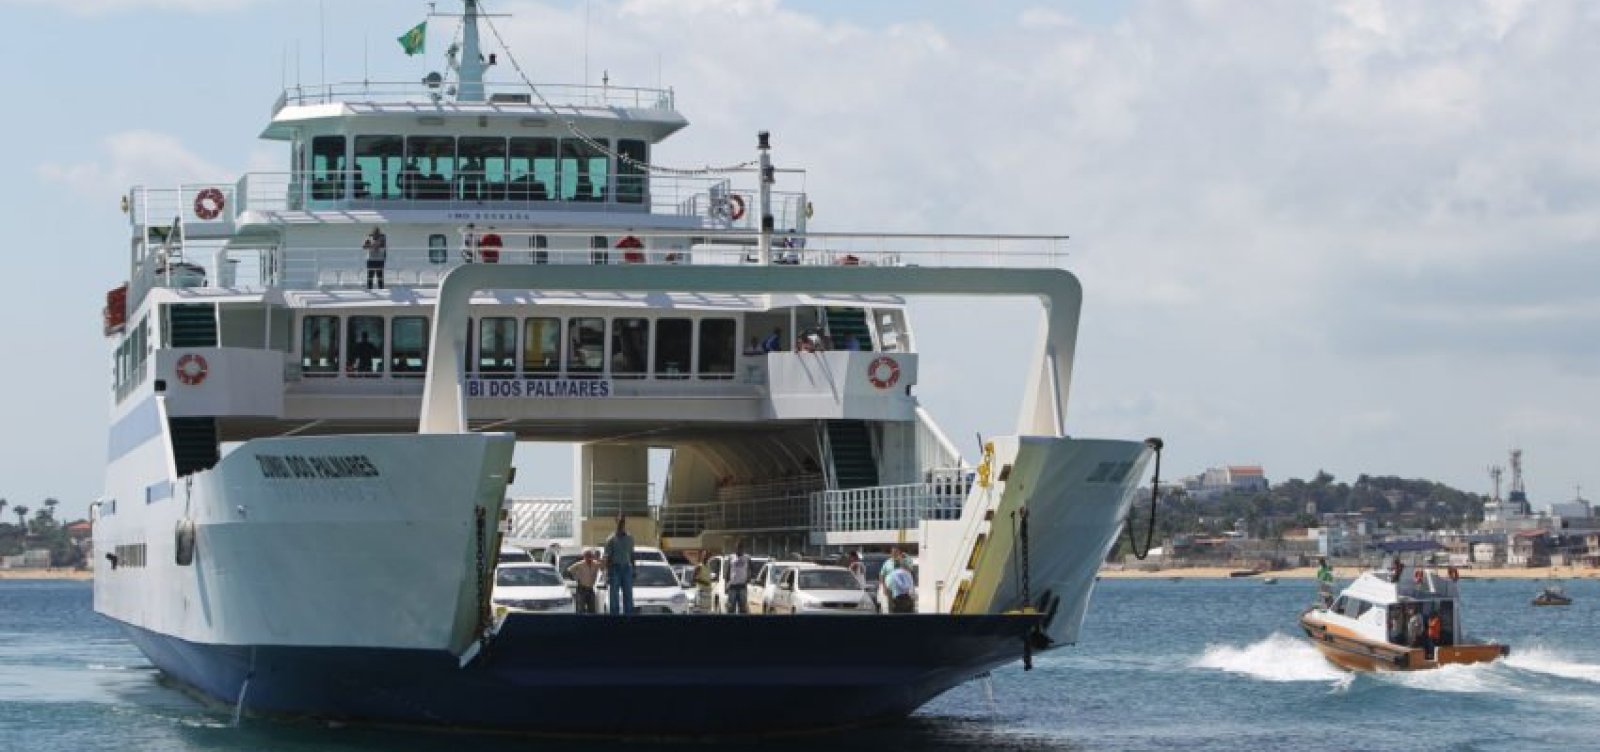 Ferry-boat registra fluxo tranquilo na tarde deste domingo